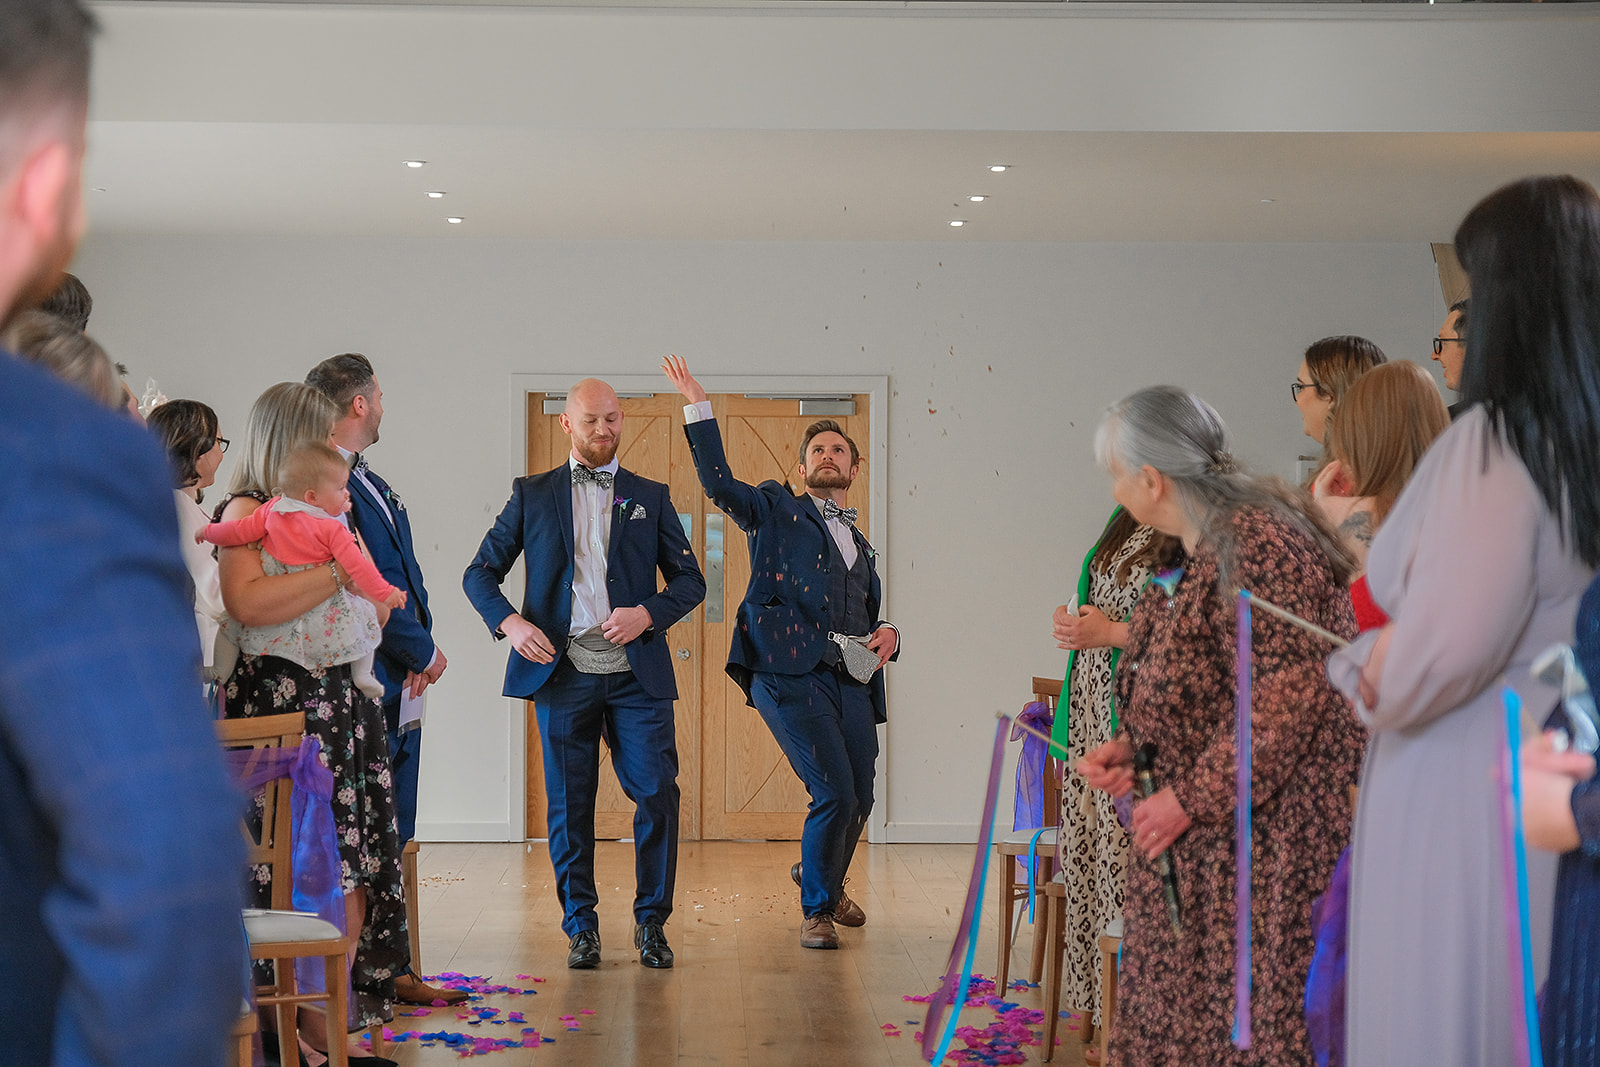 groomsmen dancing down the aisle - funny wedding ideas